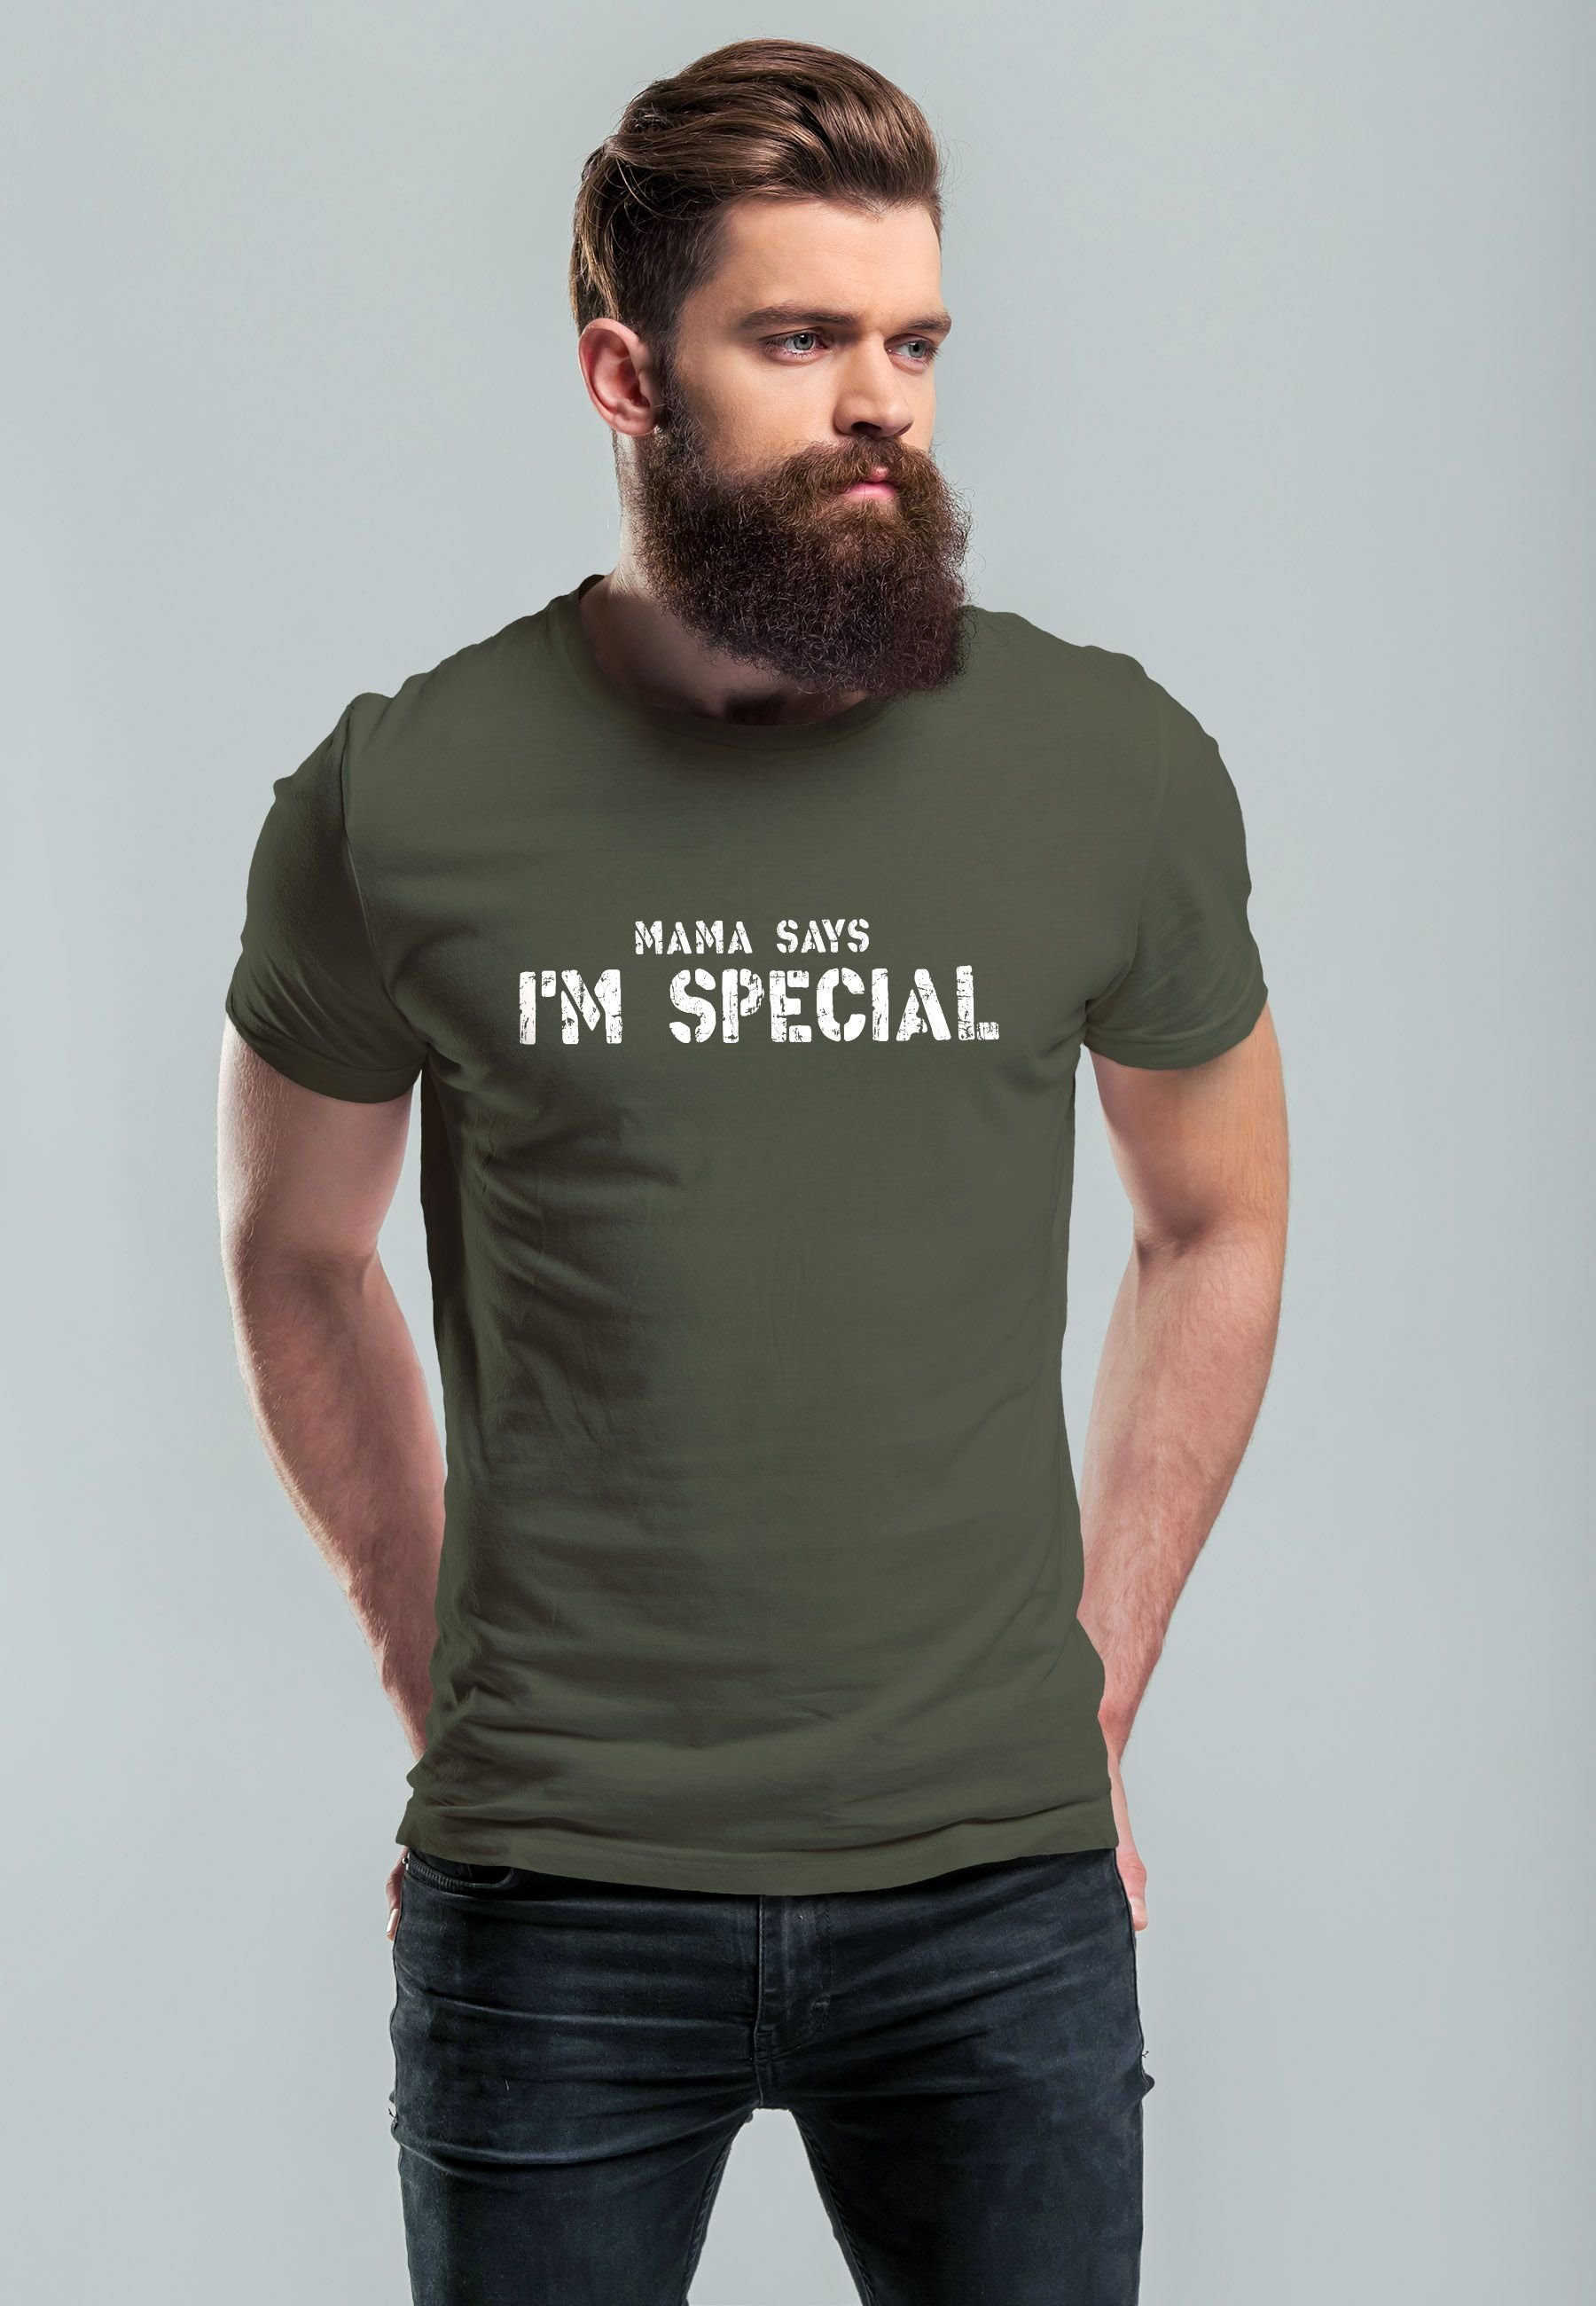 Says I Ironie T-Shirt army Am Special Neverless Print-Shirt Spruch mit lustig A Print Mama Sarkasmus Herren